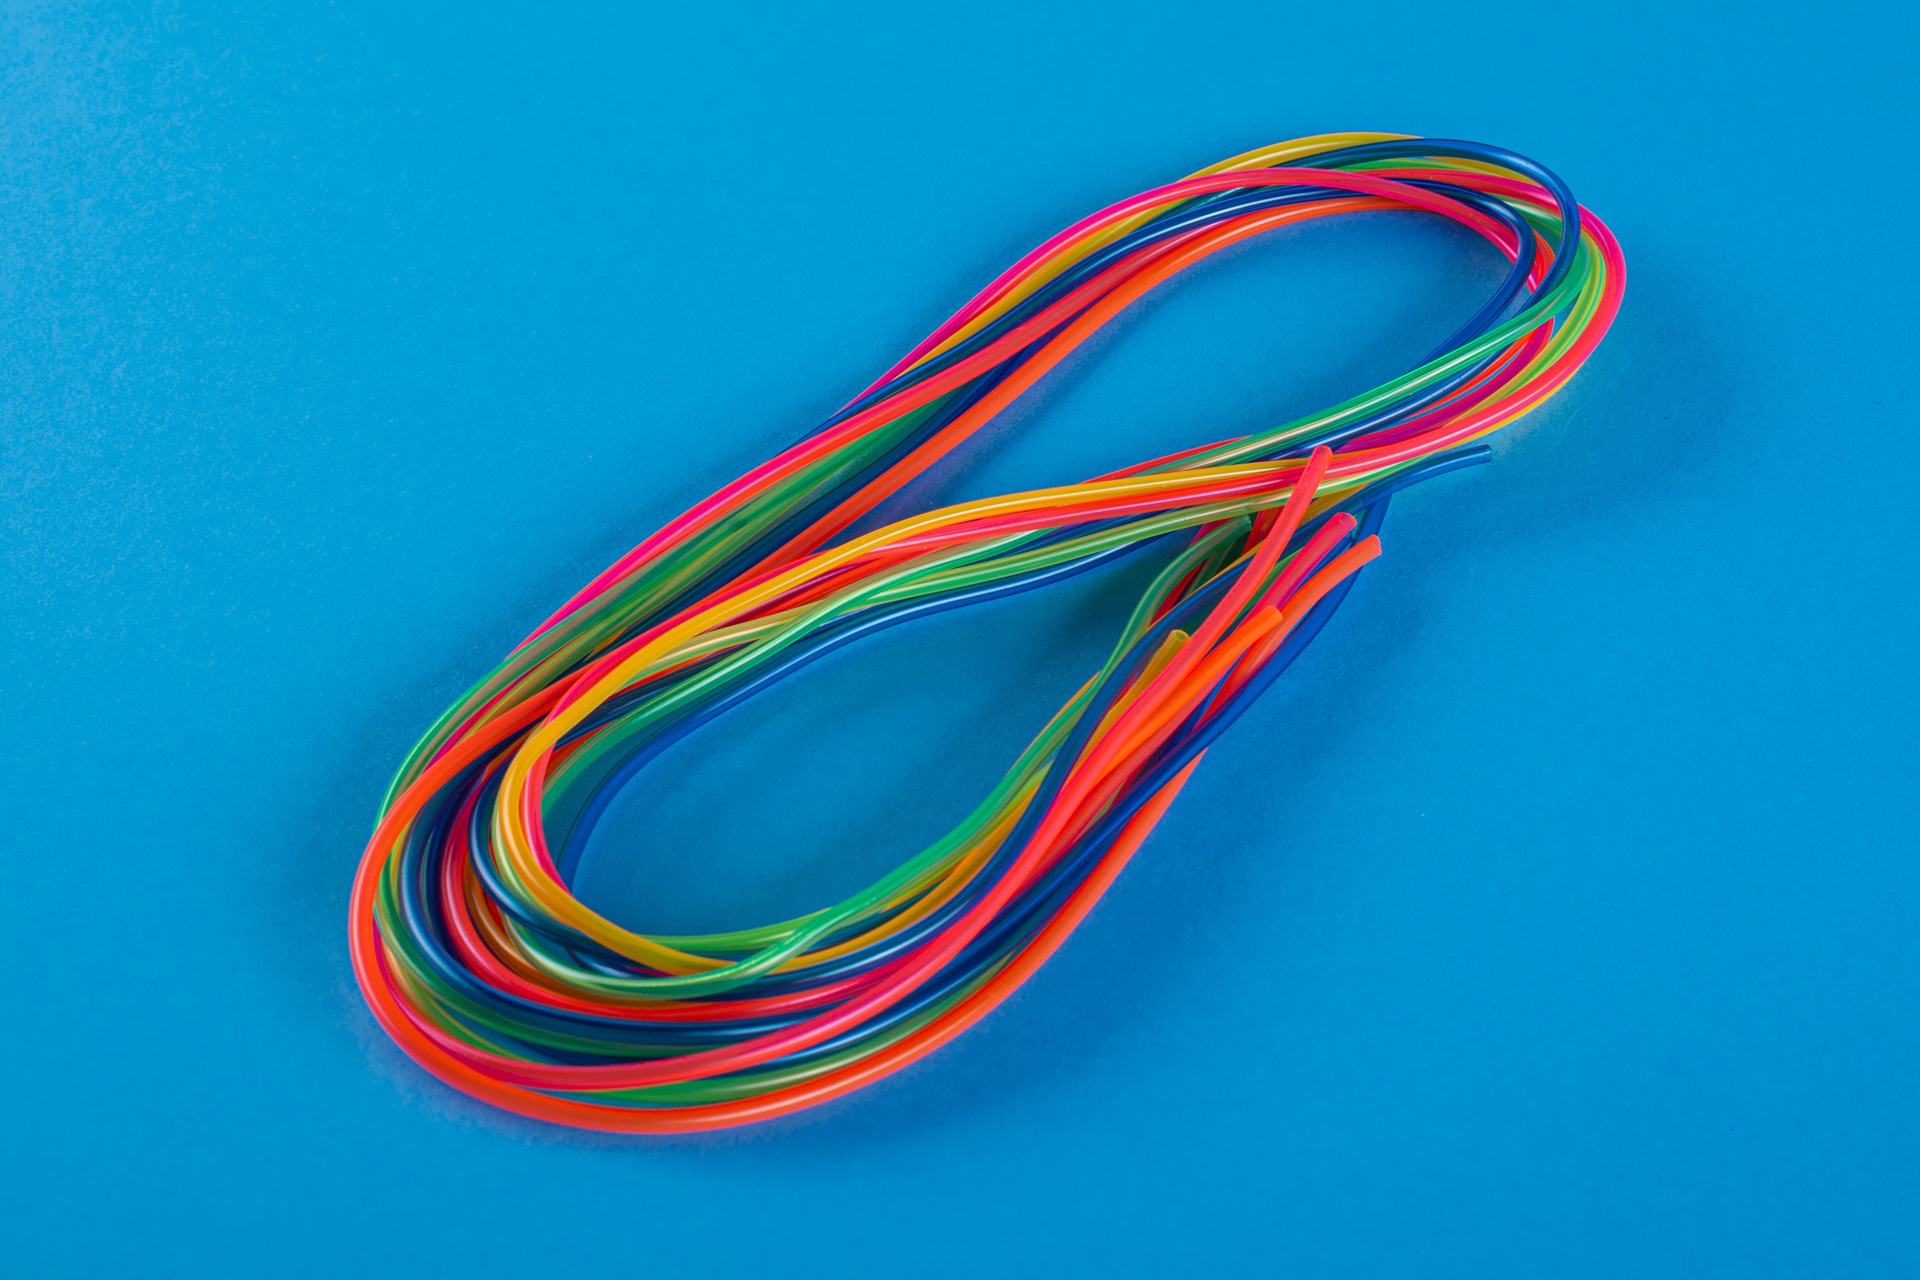 Fluoro hoses in multiple colours